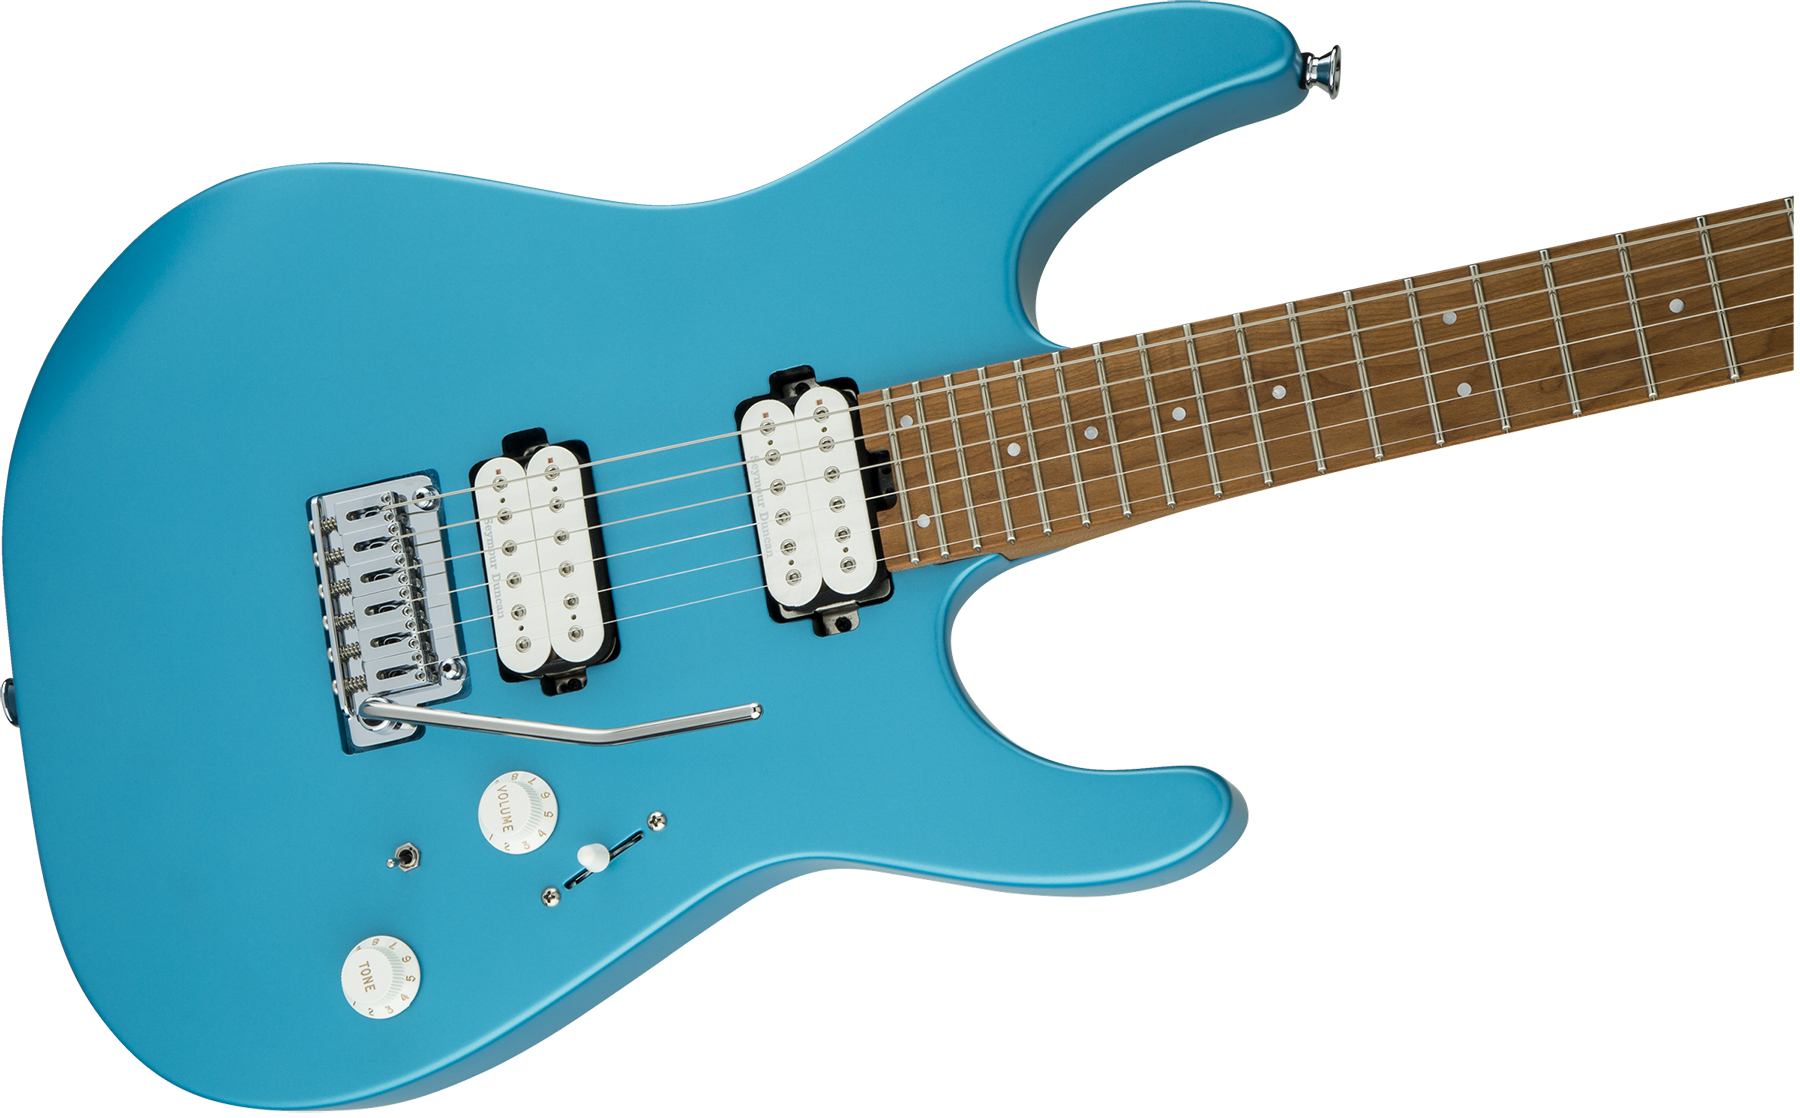 Charvel Pro-mod Dk24 Hh 2pt Cm Seymour Duncan Trem Mn - Matte Blue Frost - Str shape electric guitar - Variation 2